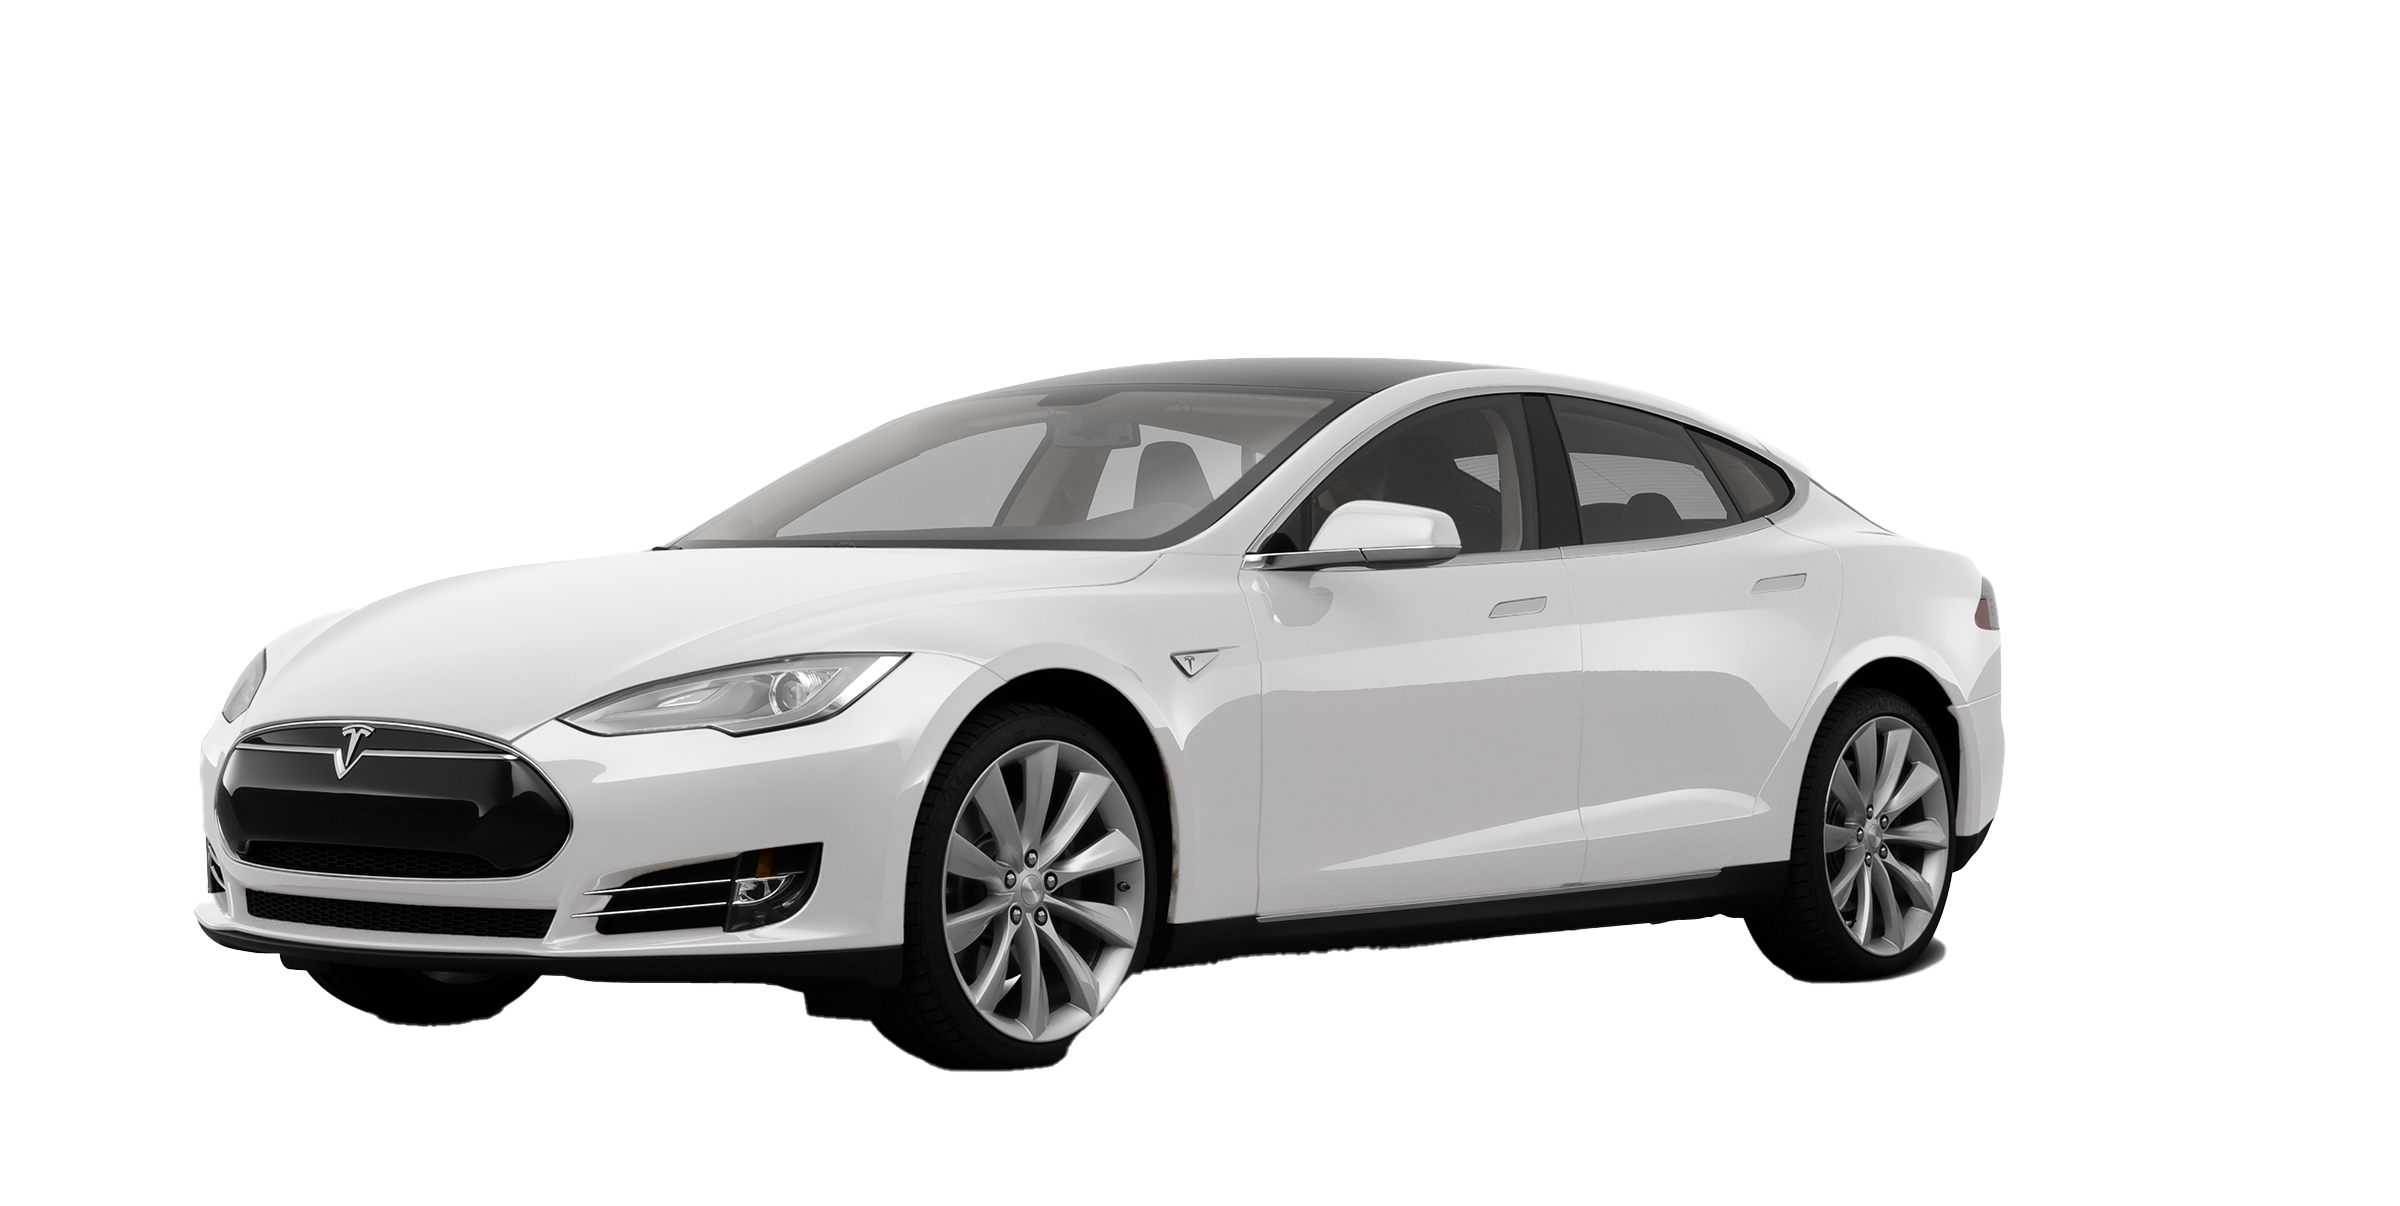 White Tesla Model S PNG HD Image